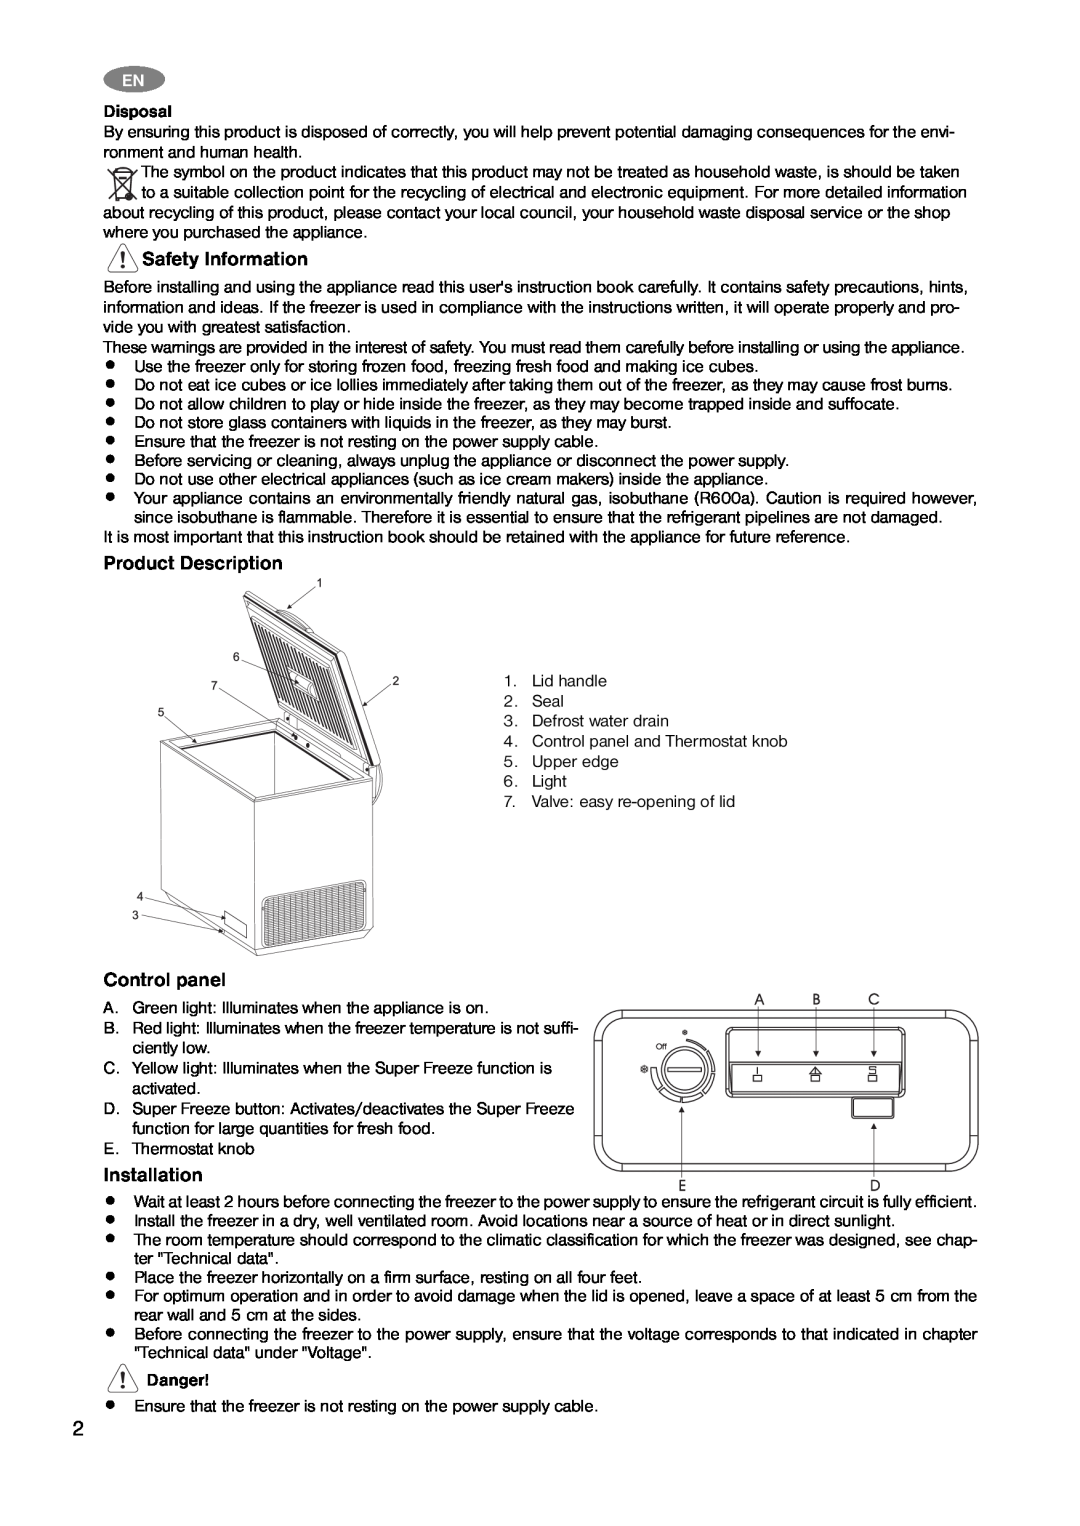 Zanussi ZFC 632 WAP, ZFC 638 WAP Safety Information, Product Description, Control panel, Installation, Disposal, Danger 